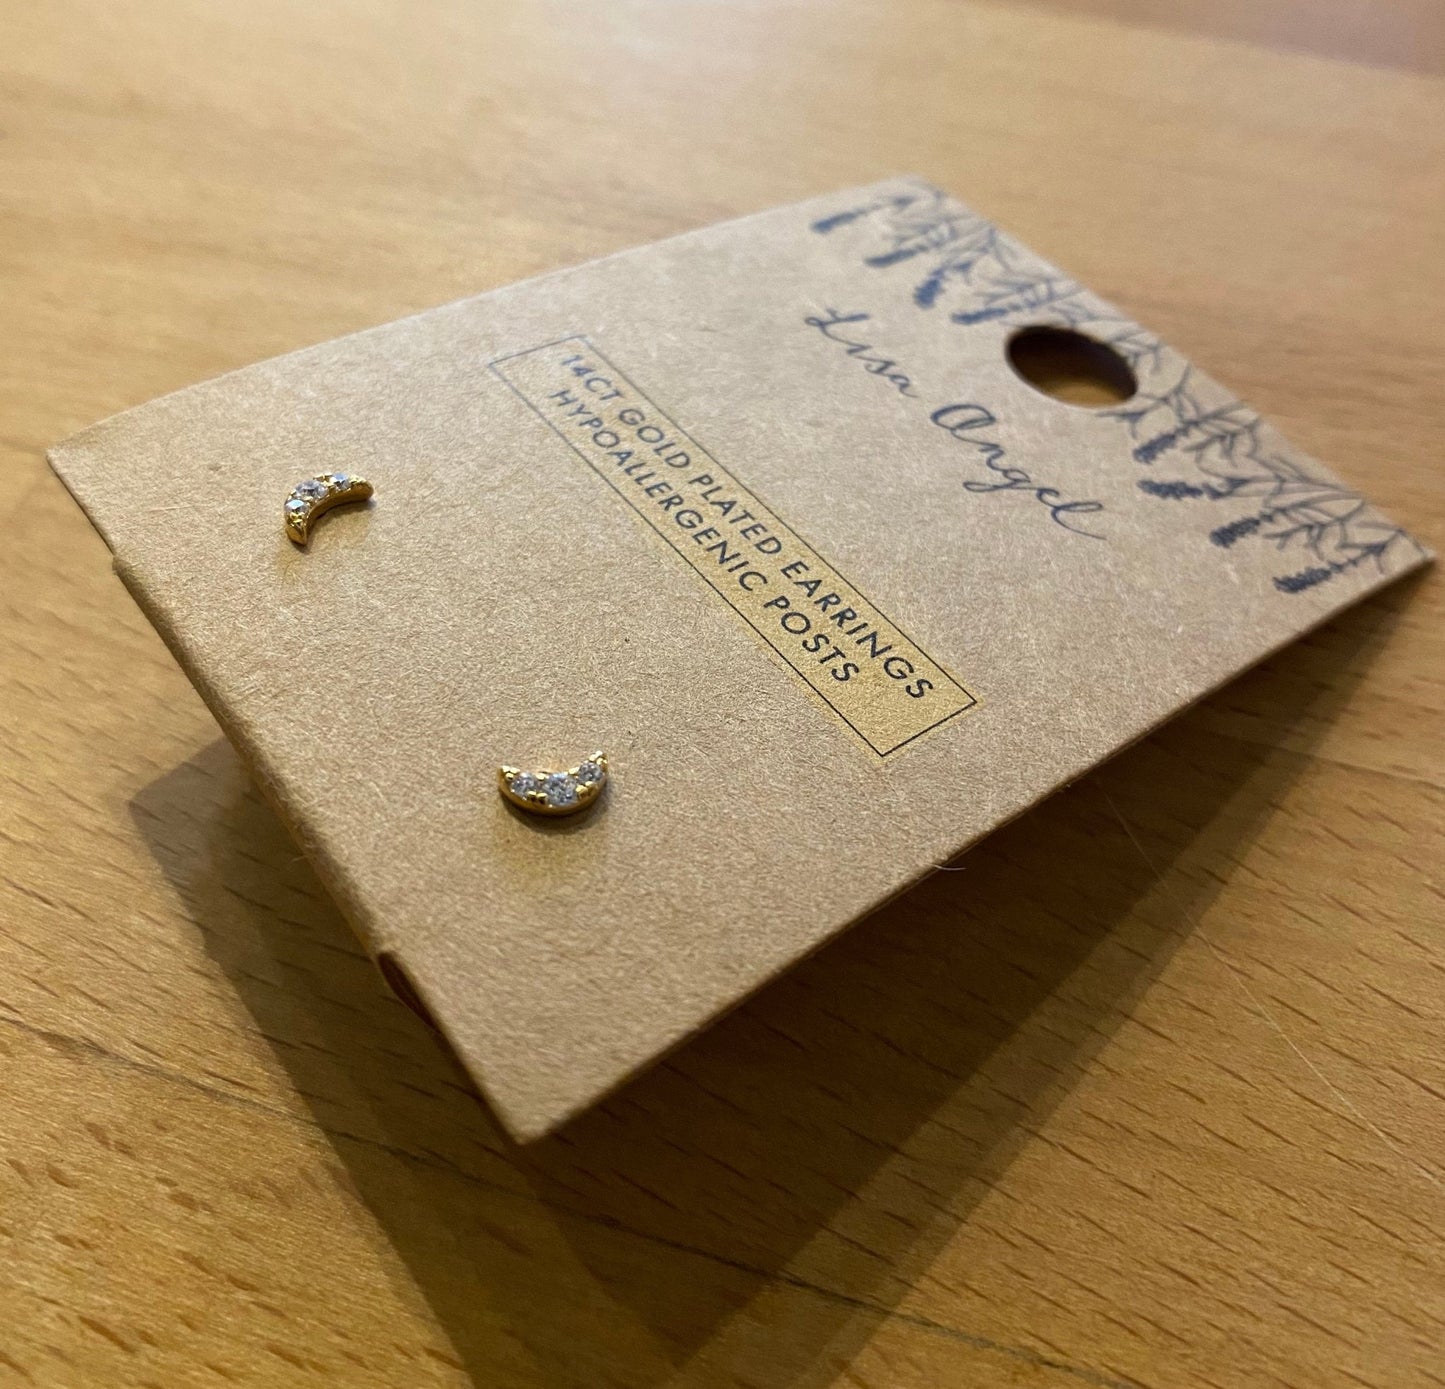 Heliotique | Lisa Angel Tiny Crystal Moon Stud Earrings - Gold